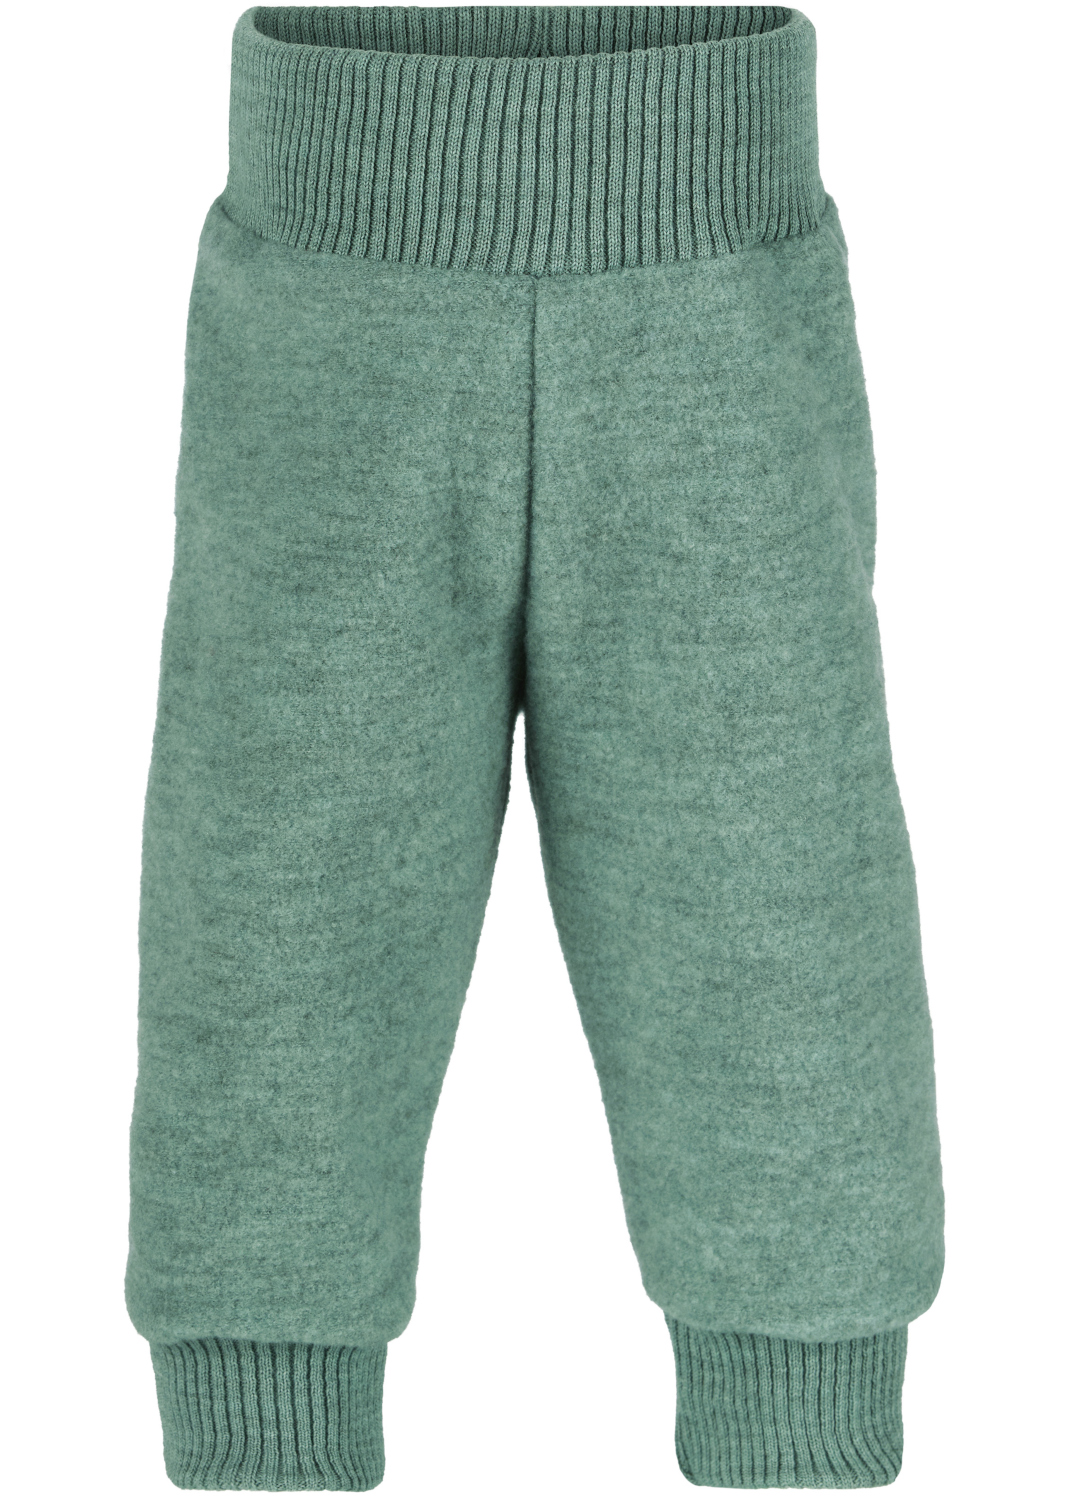 Pantaloni per bambini in pura lana cotta biologica